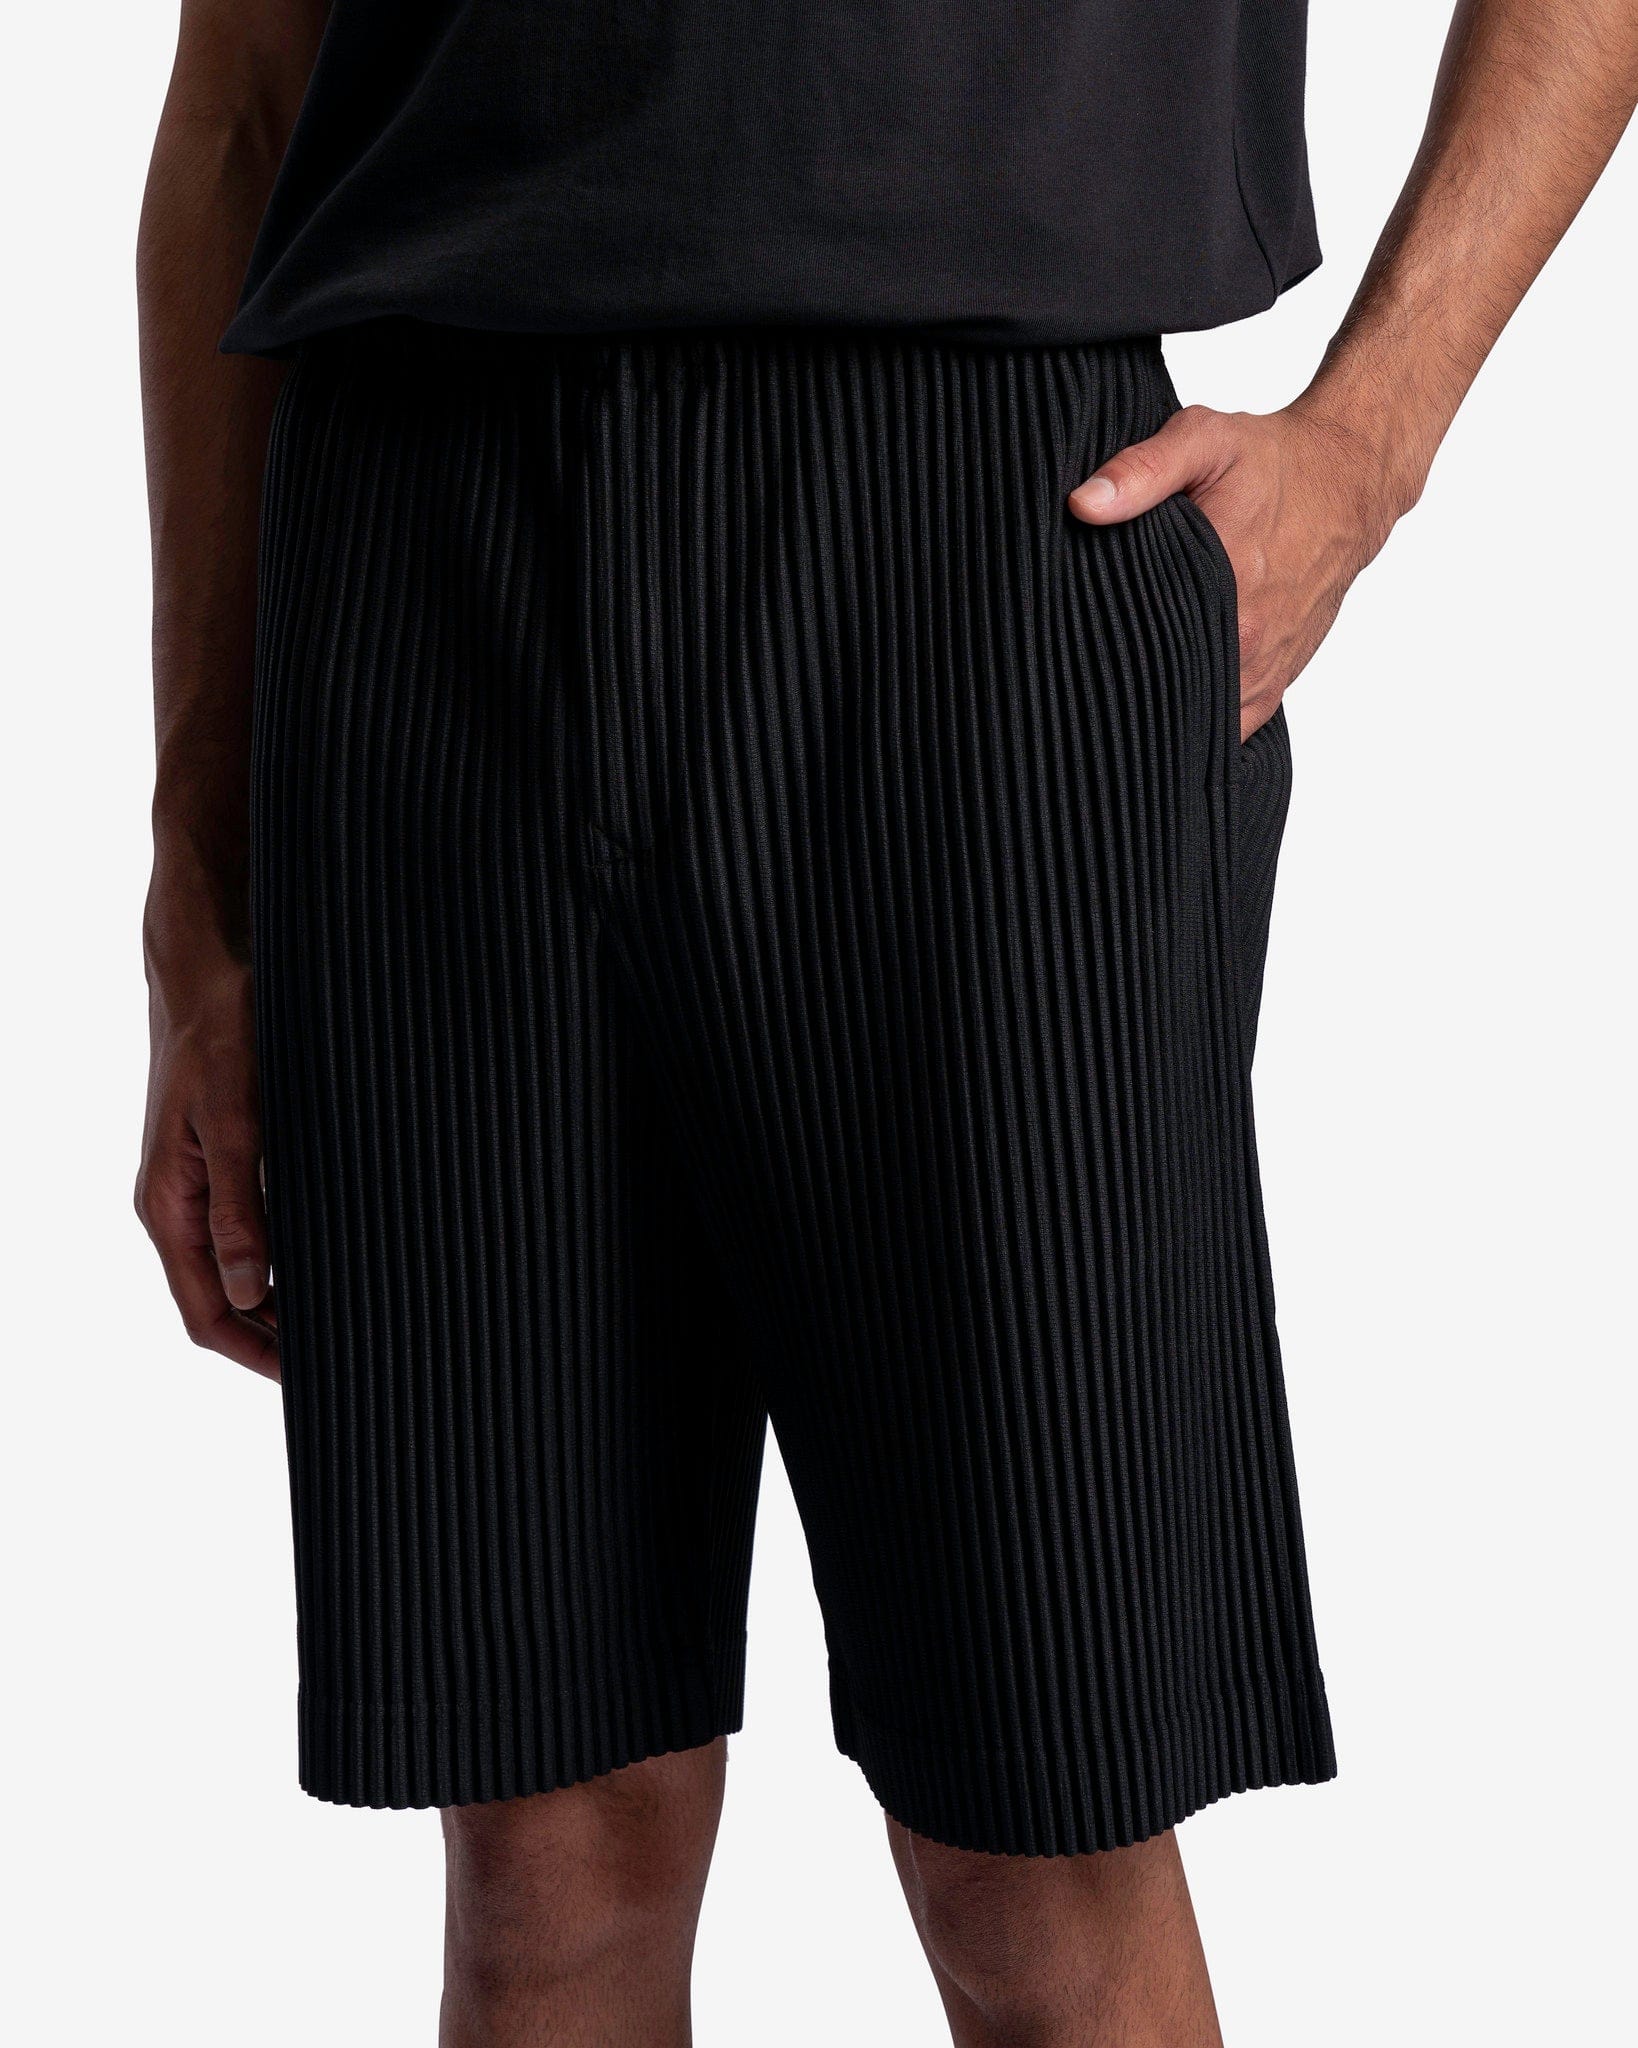 Homme Plissé Issey Miyake Men's Shorts MC May Shorts in Black